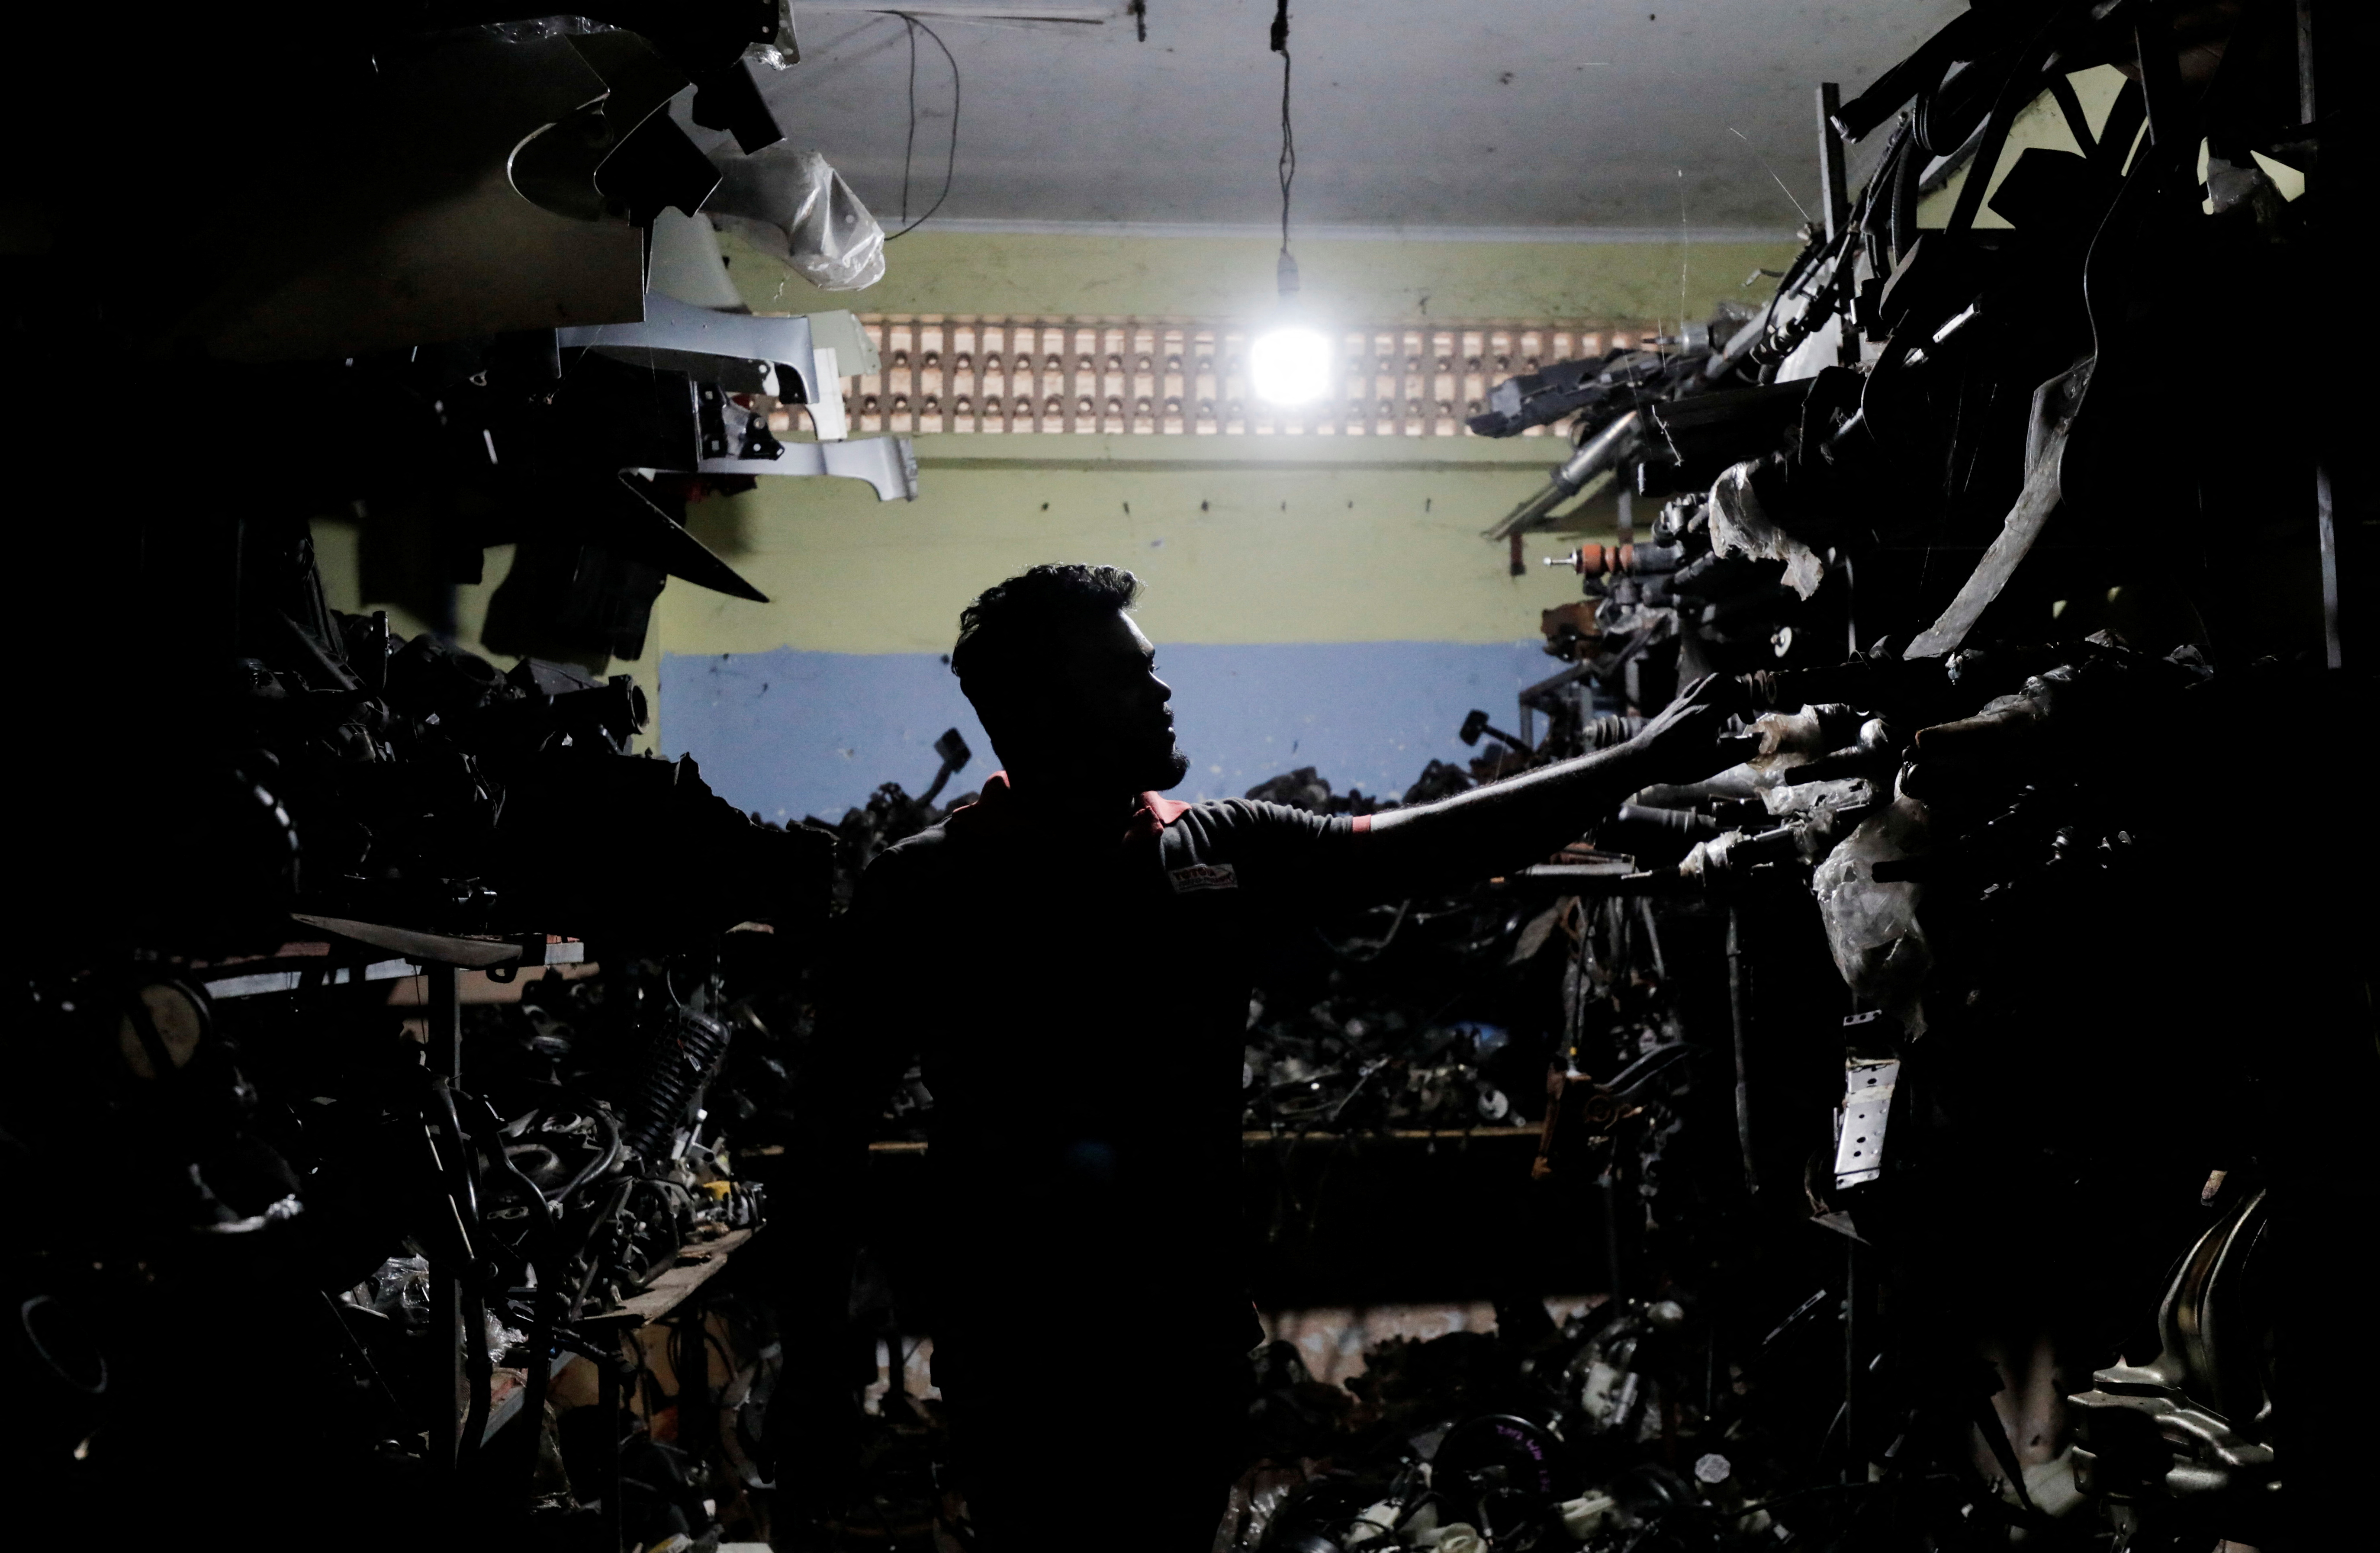 Shortage of Suzuki car mirrors in Sri Lanka reflects growing economic crisis